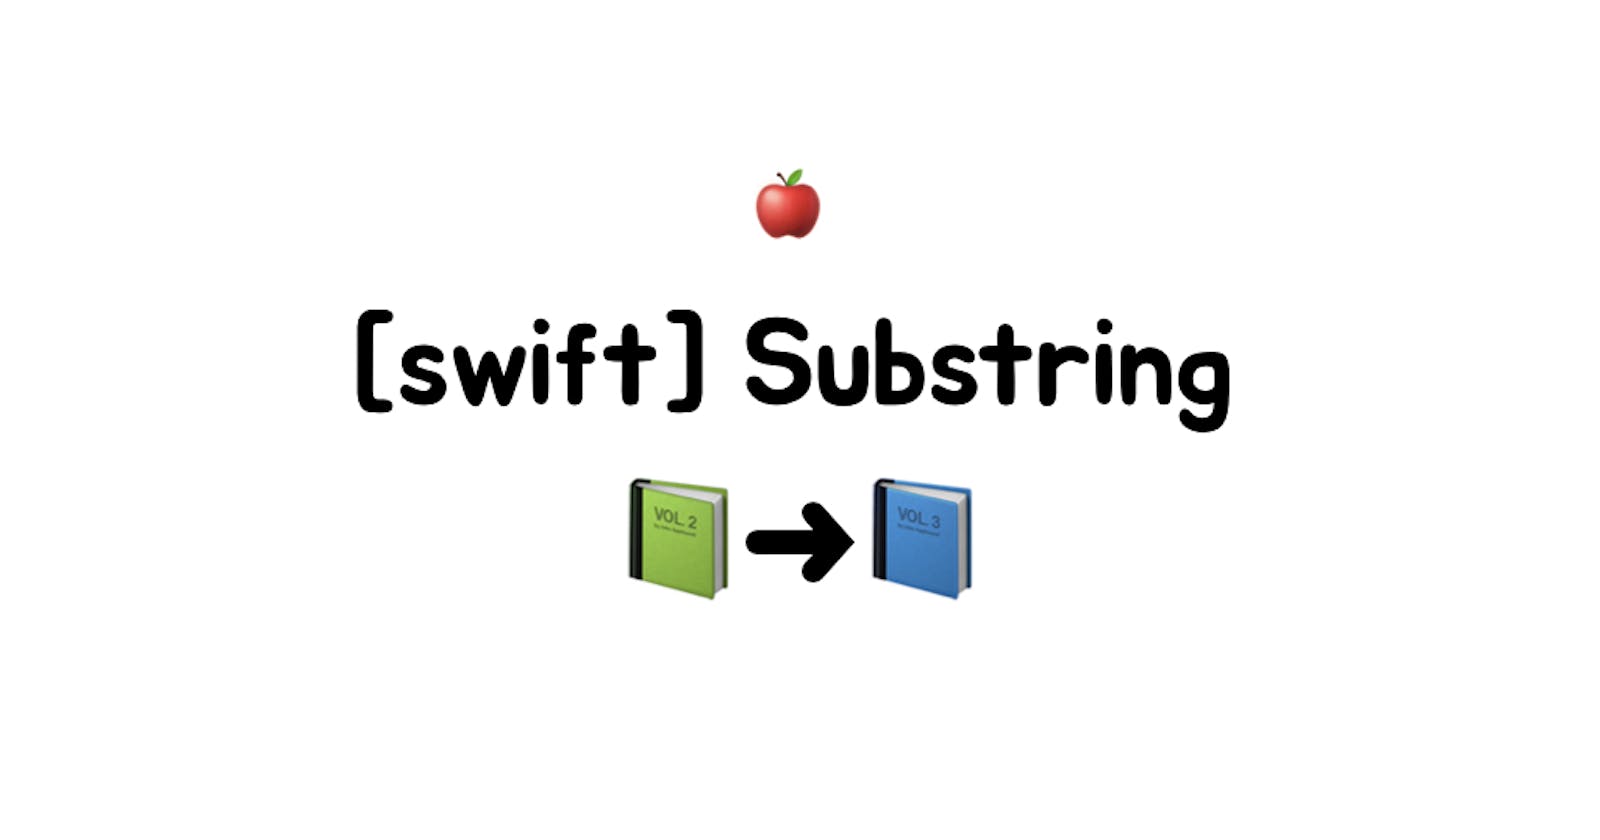 [swift] Substring는 왜 있는 걸까?